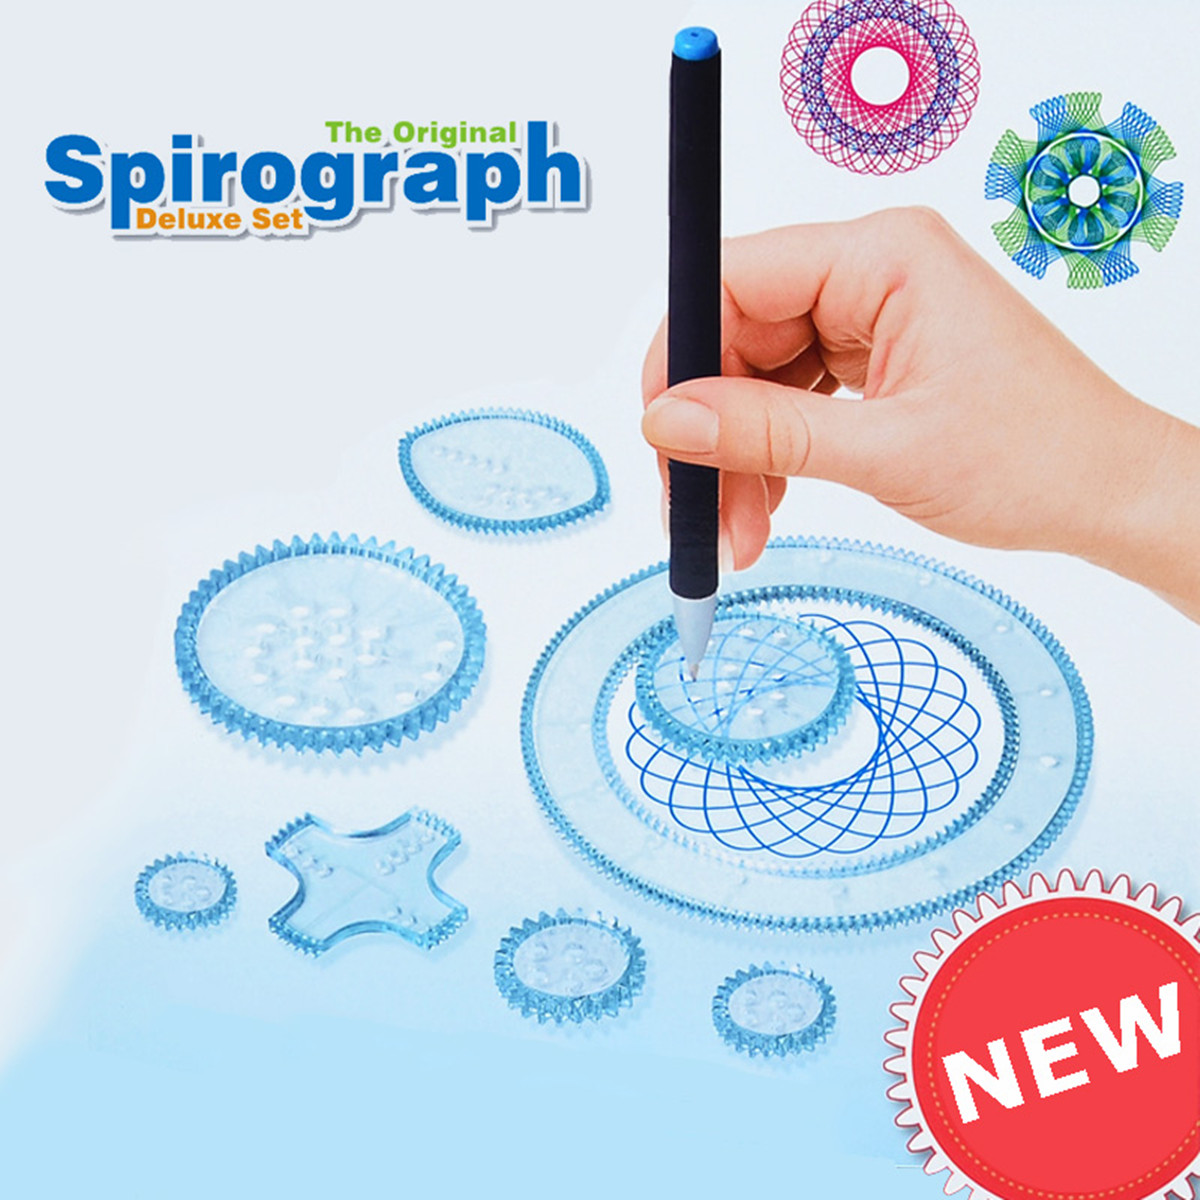 Spirograph dessin jouets Set dessin creatif spirale Design etudiants dessin ensemble apprentissage Art